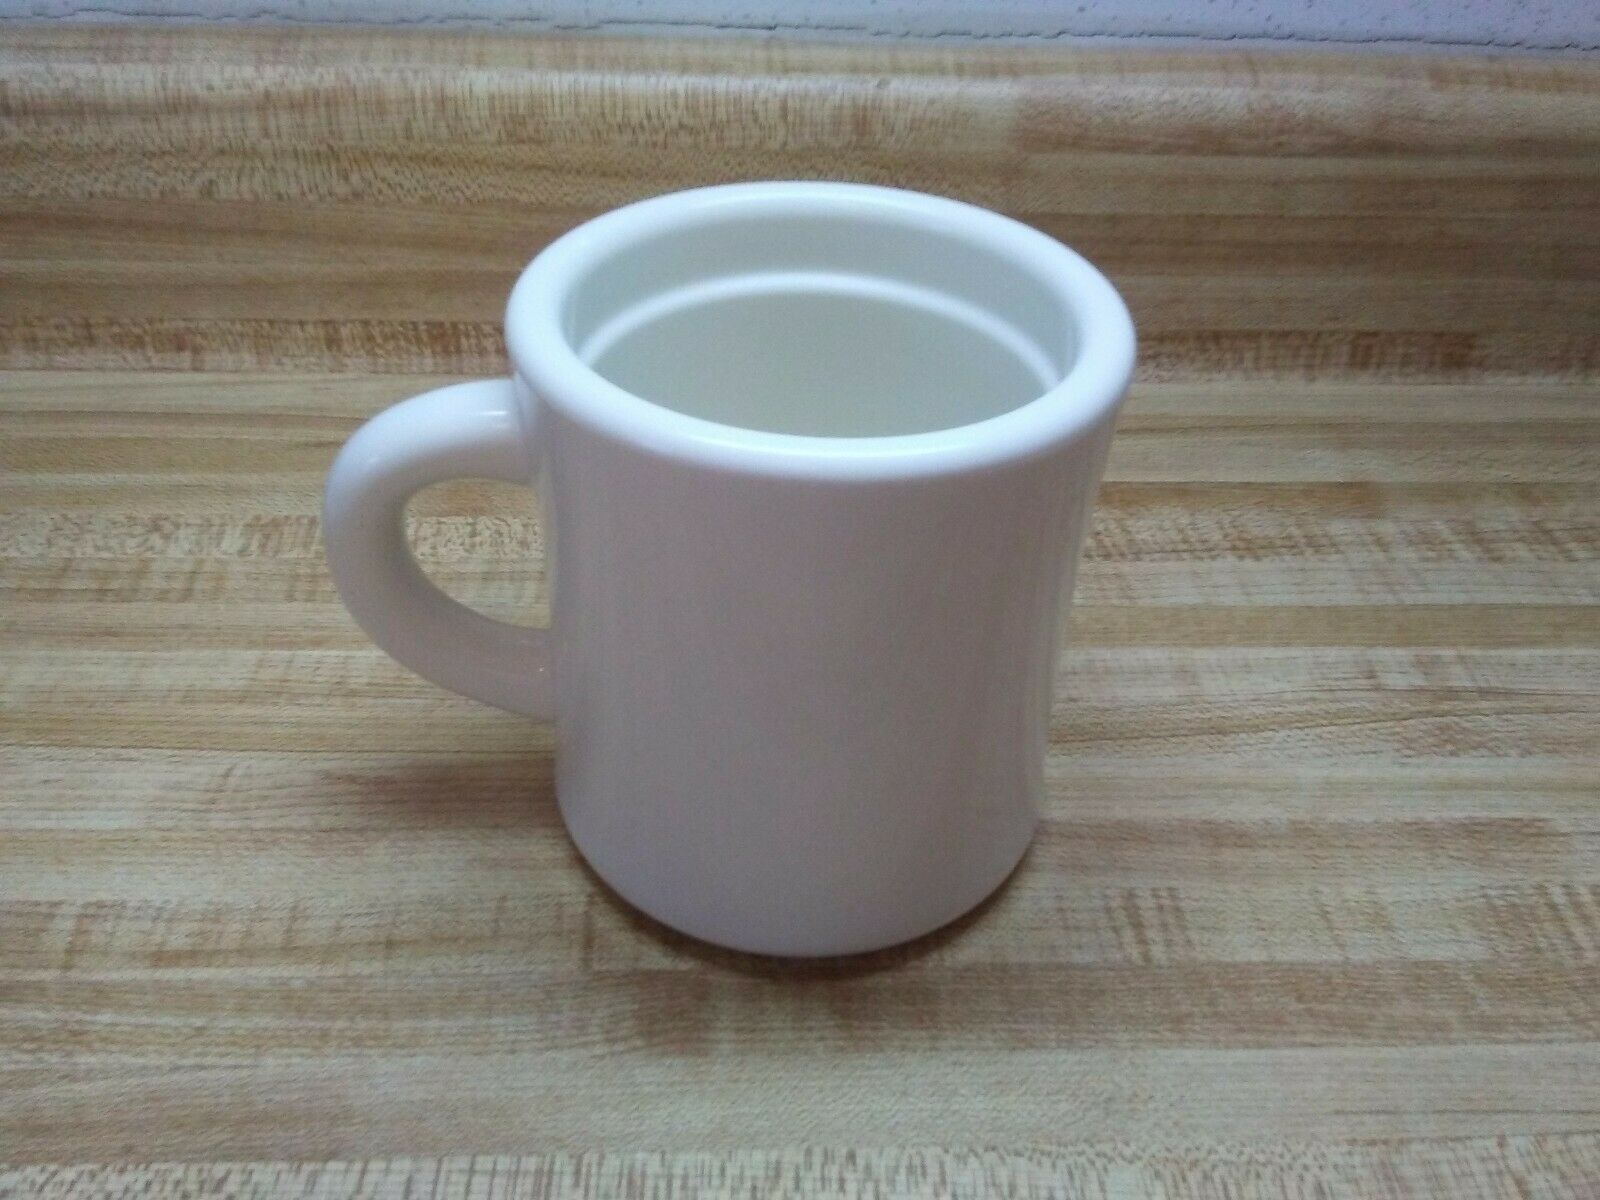 Two 12 oz Insulated Coffee Mugs like Classic Aladdin Mugs Thermo